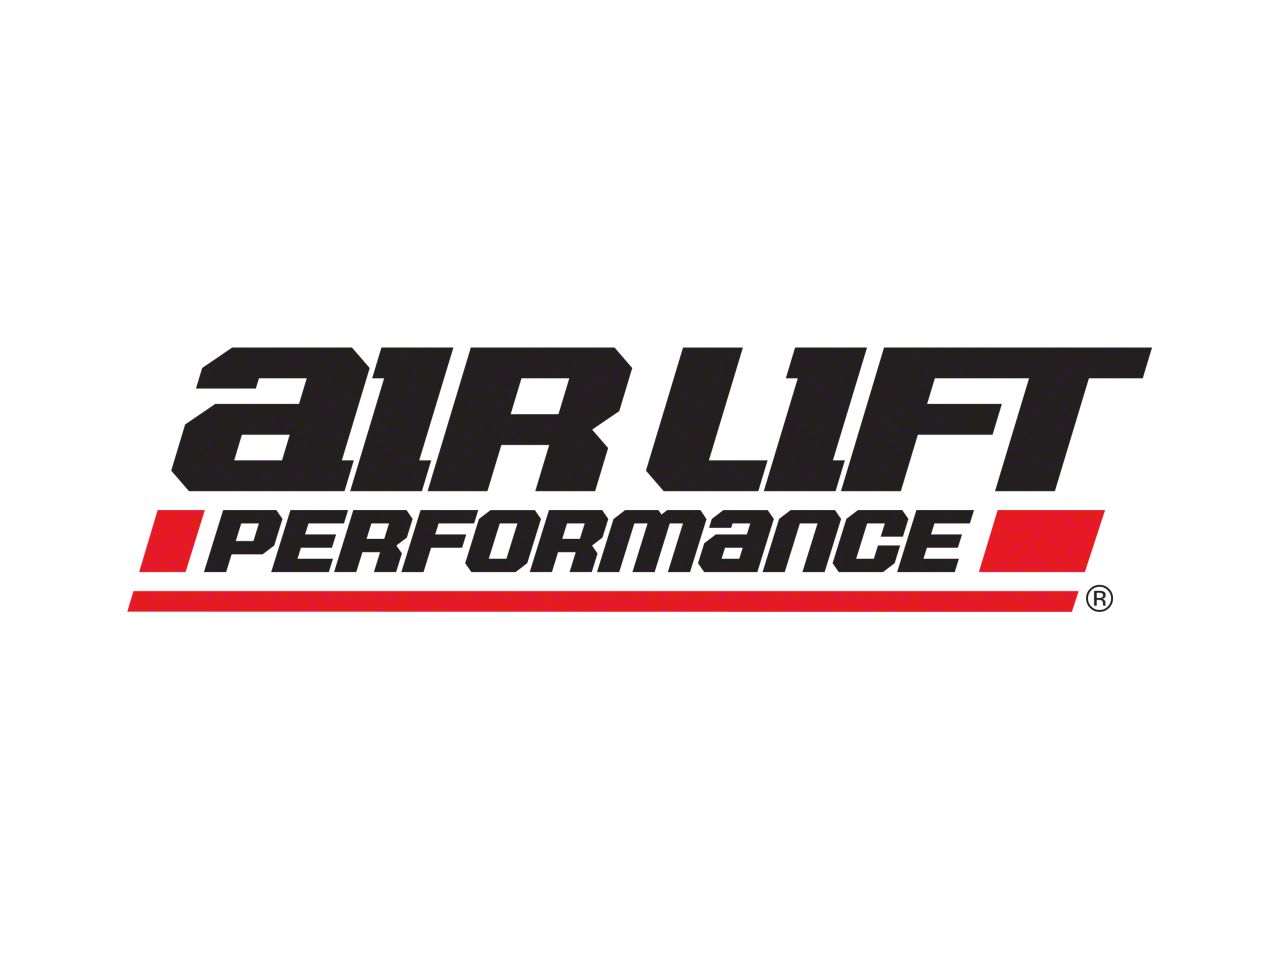 Air Lift Parts